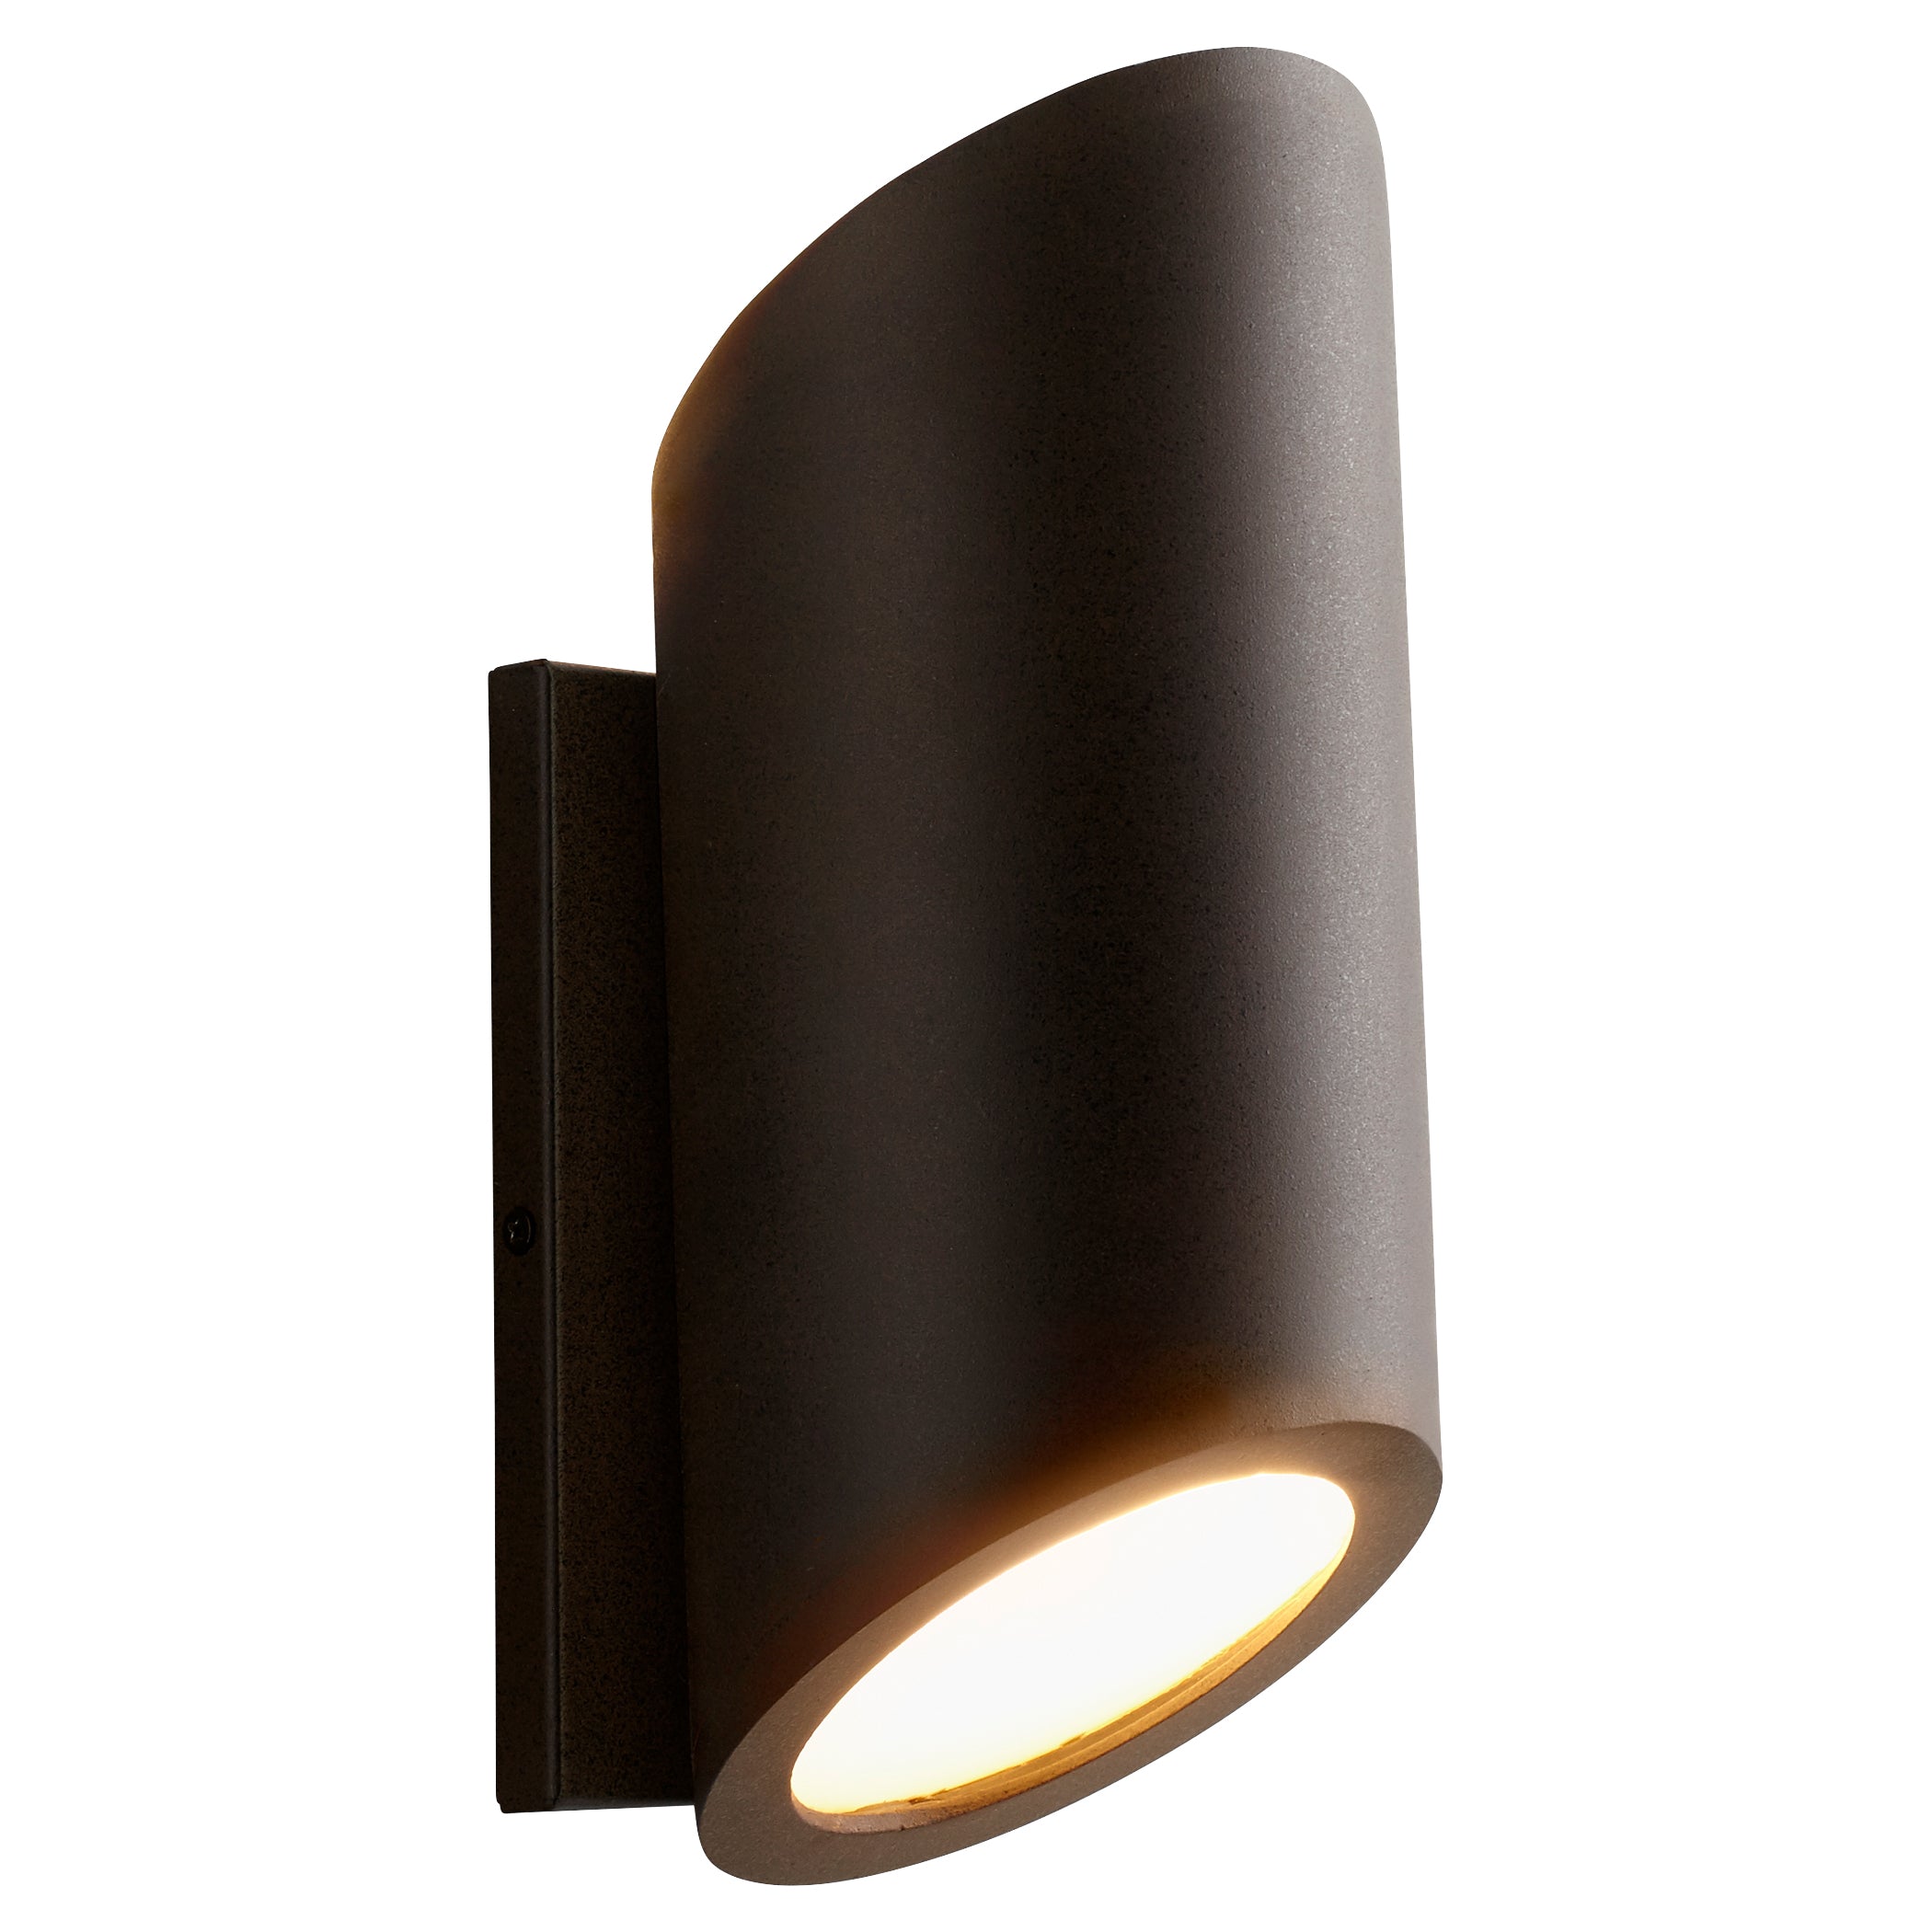 Oxygen Realm 3-750-22 Cylinder Wall Light Fixture - Oiled Bronze